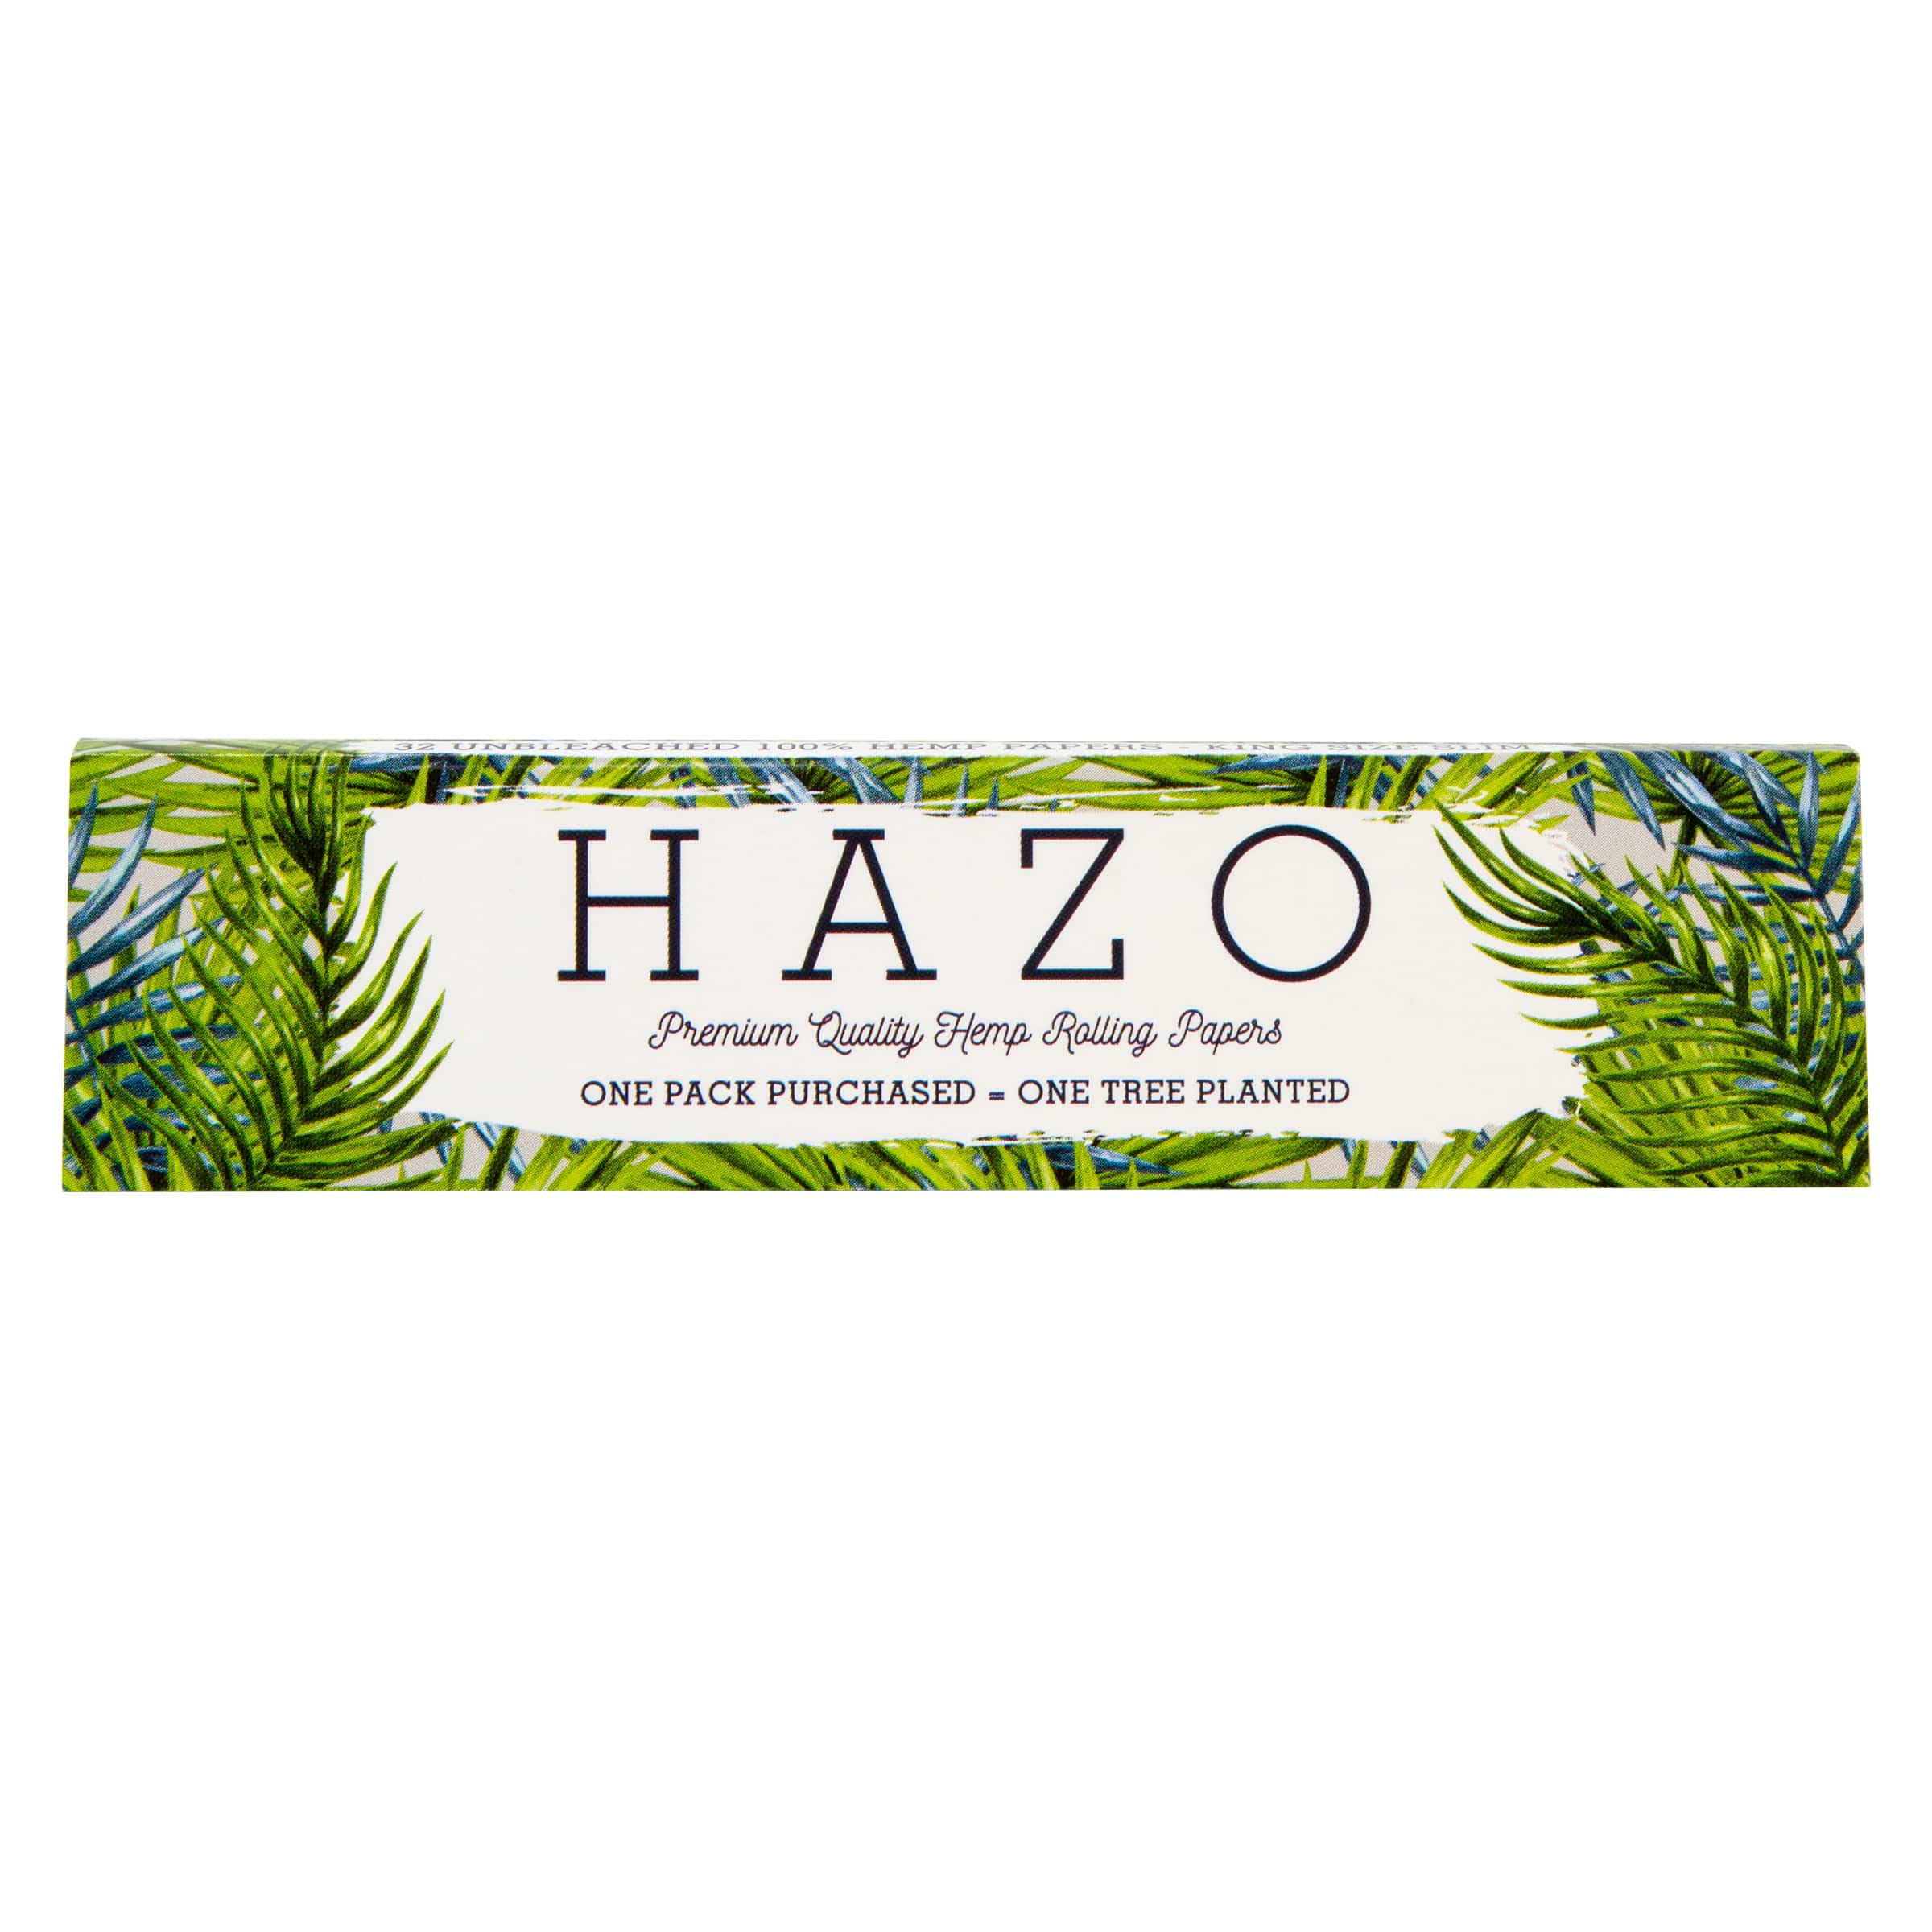 Full Display HAZO King Size Slim (50 packs)